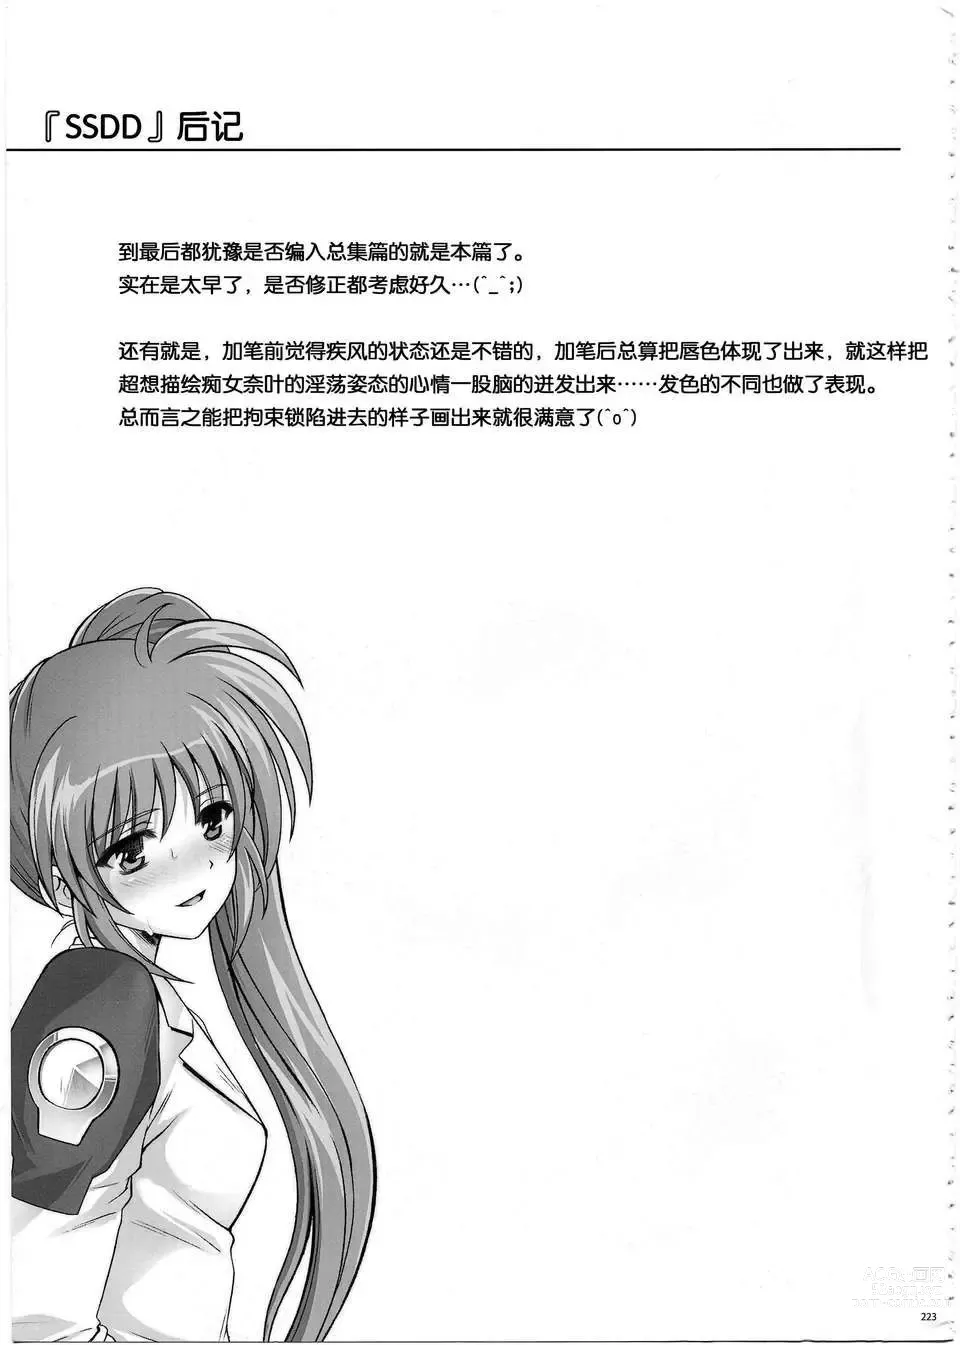 Page 226 of doujinshi 1002 サイクロンの総集編 2